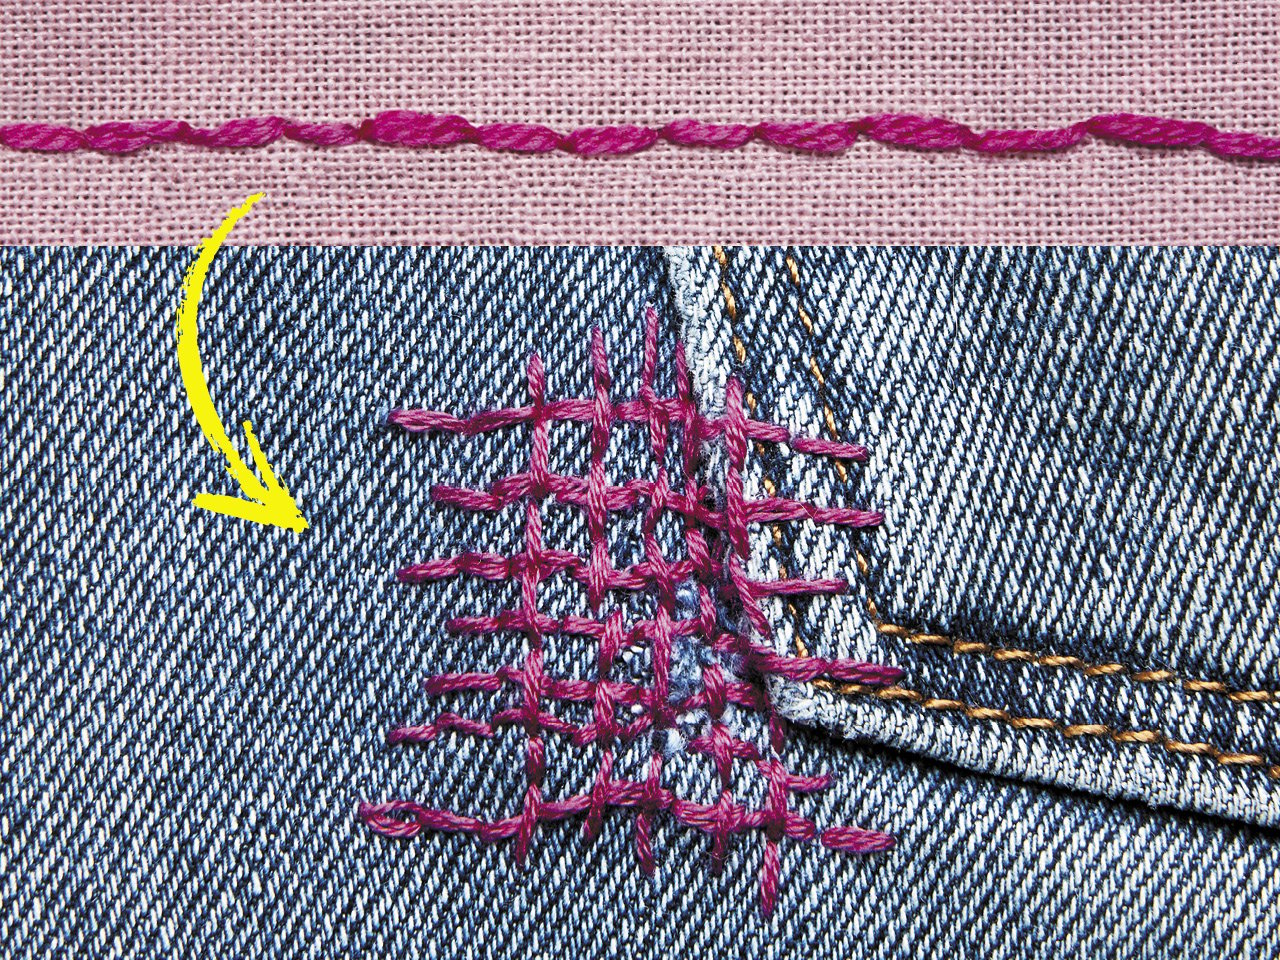 A demonstration of the purple thread back stitch on denim